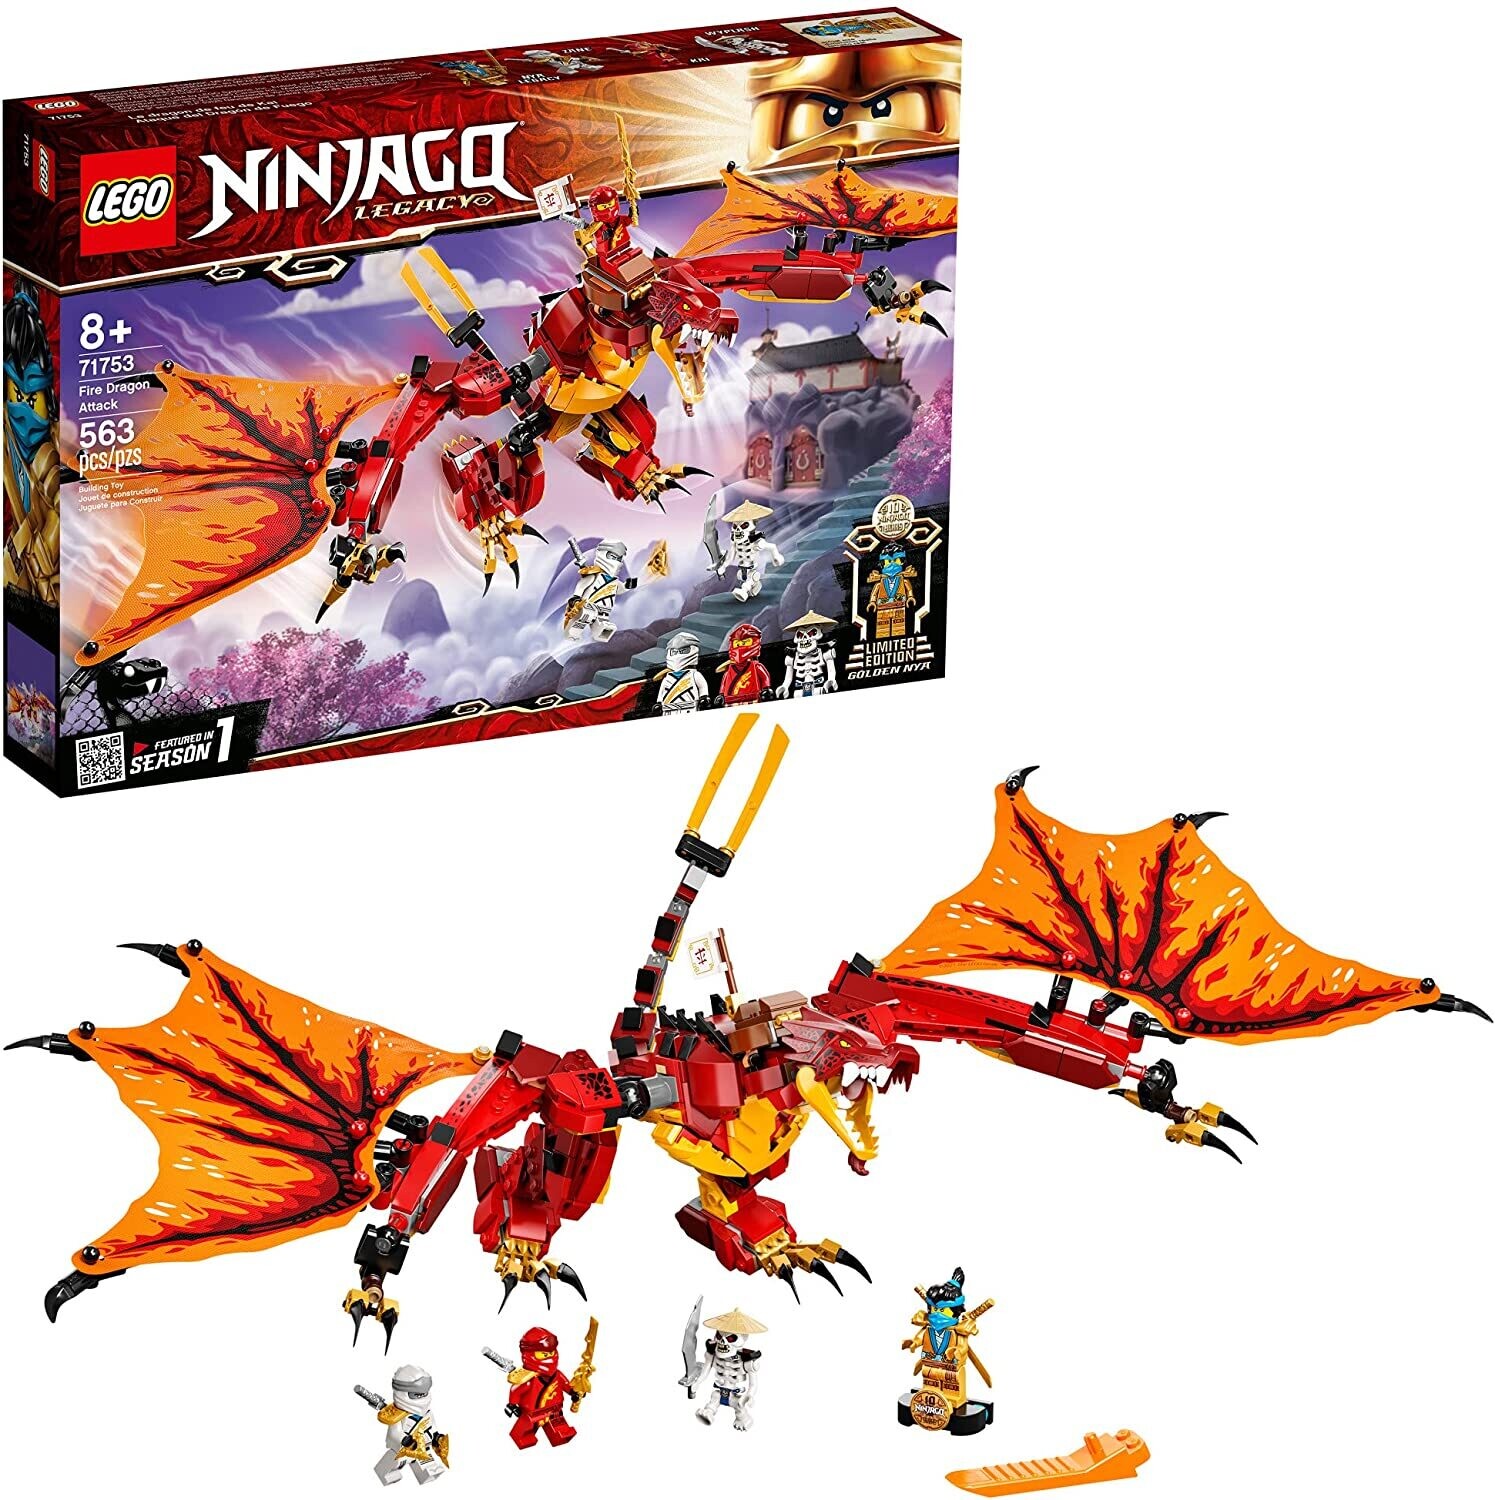 Lego 71753 Ninjago Fire Dragon Attack